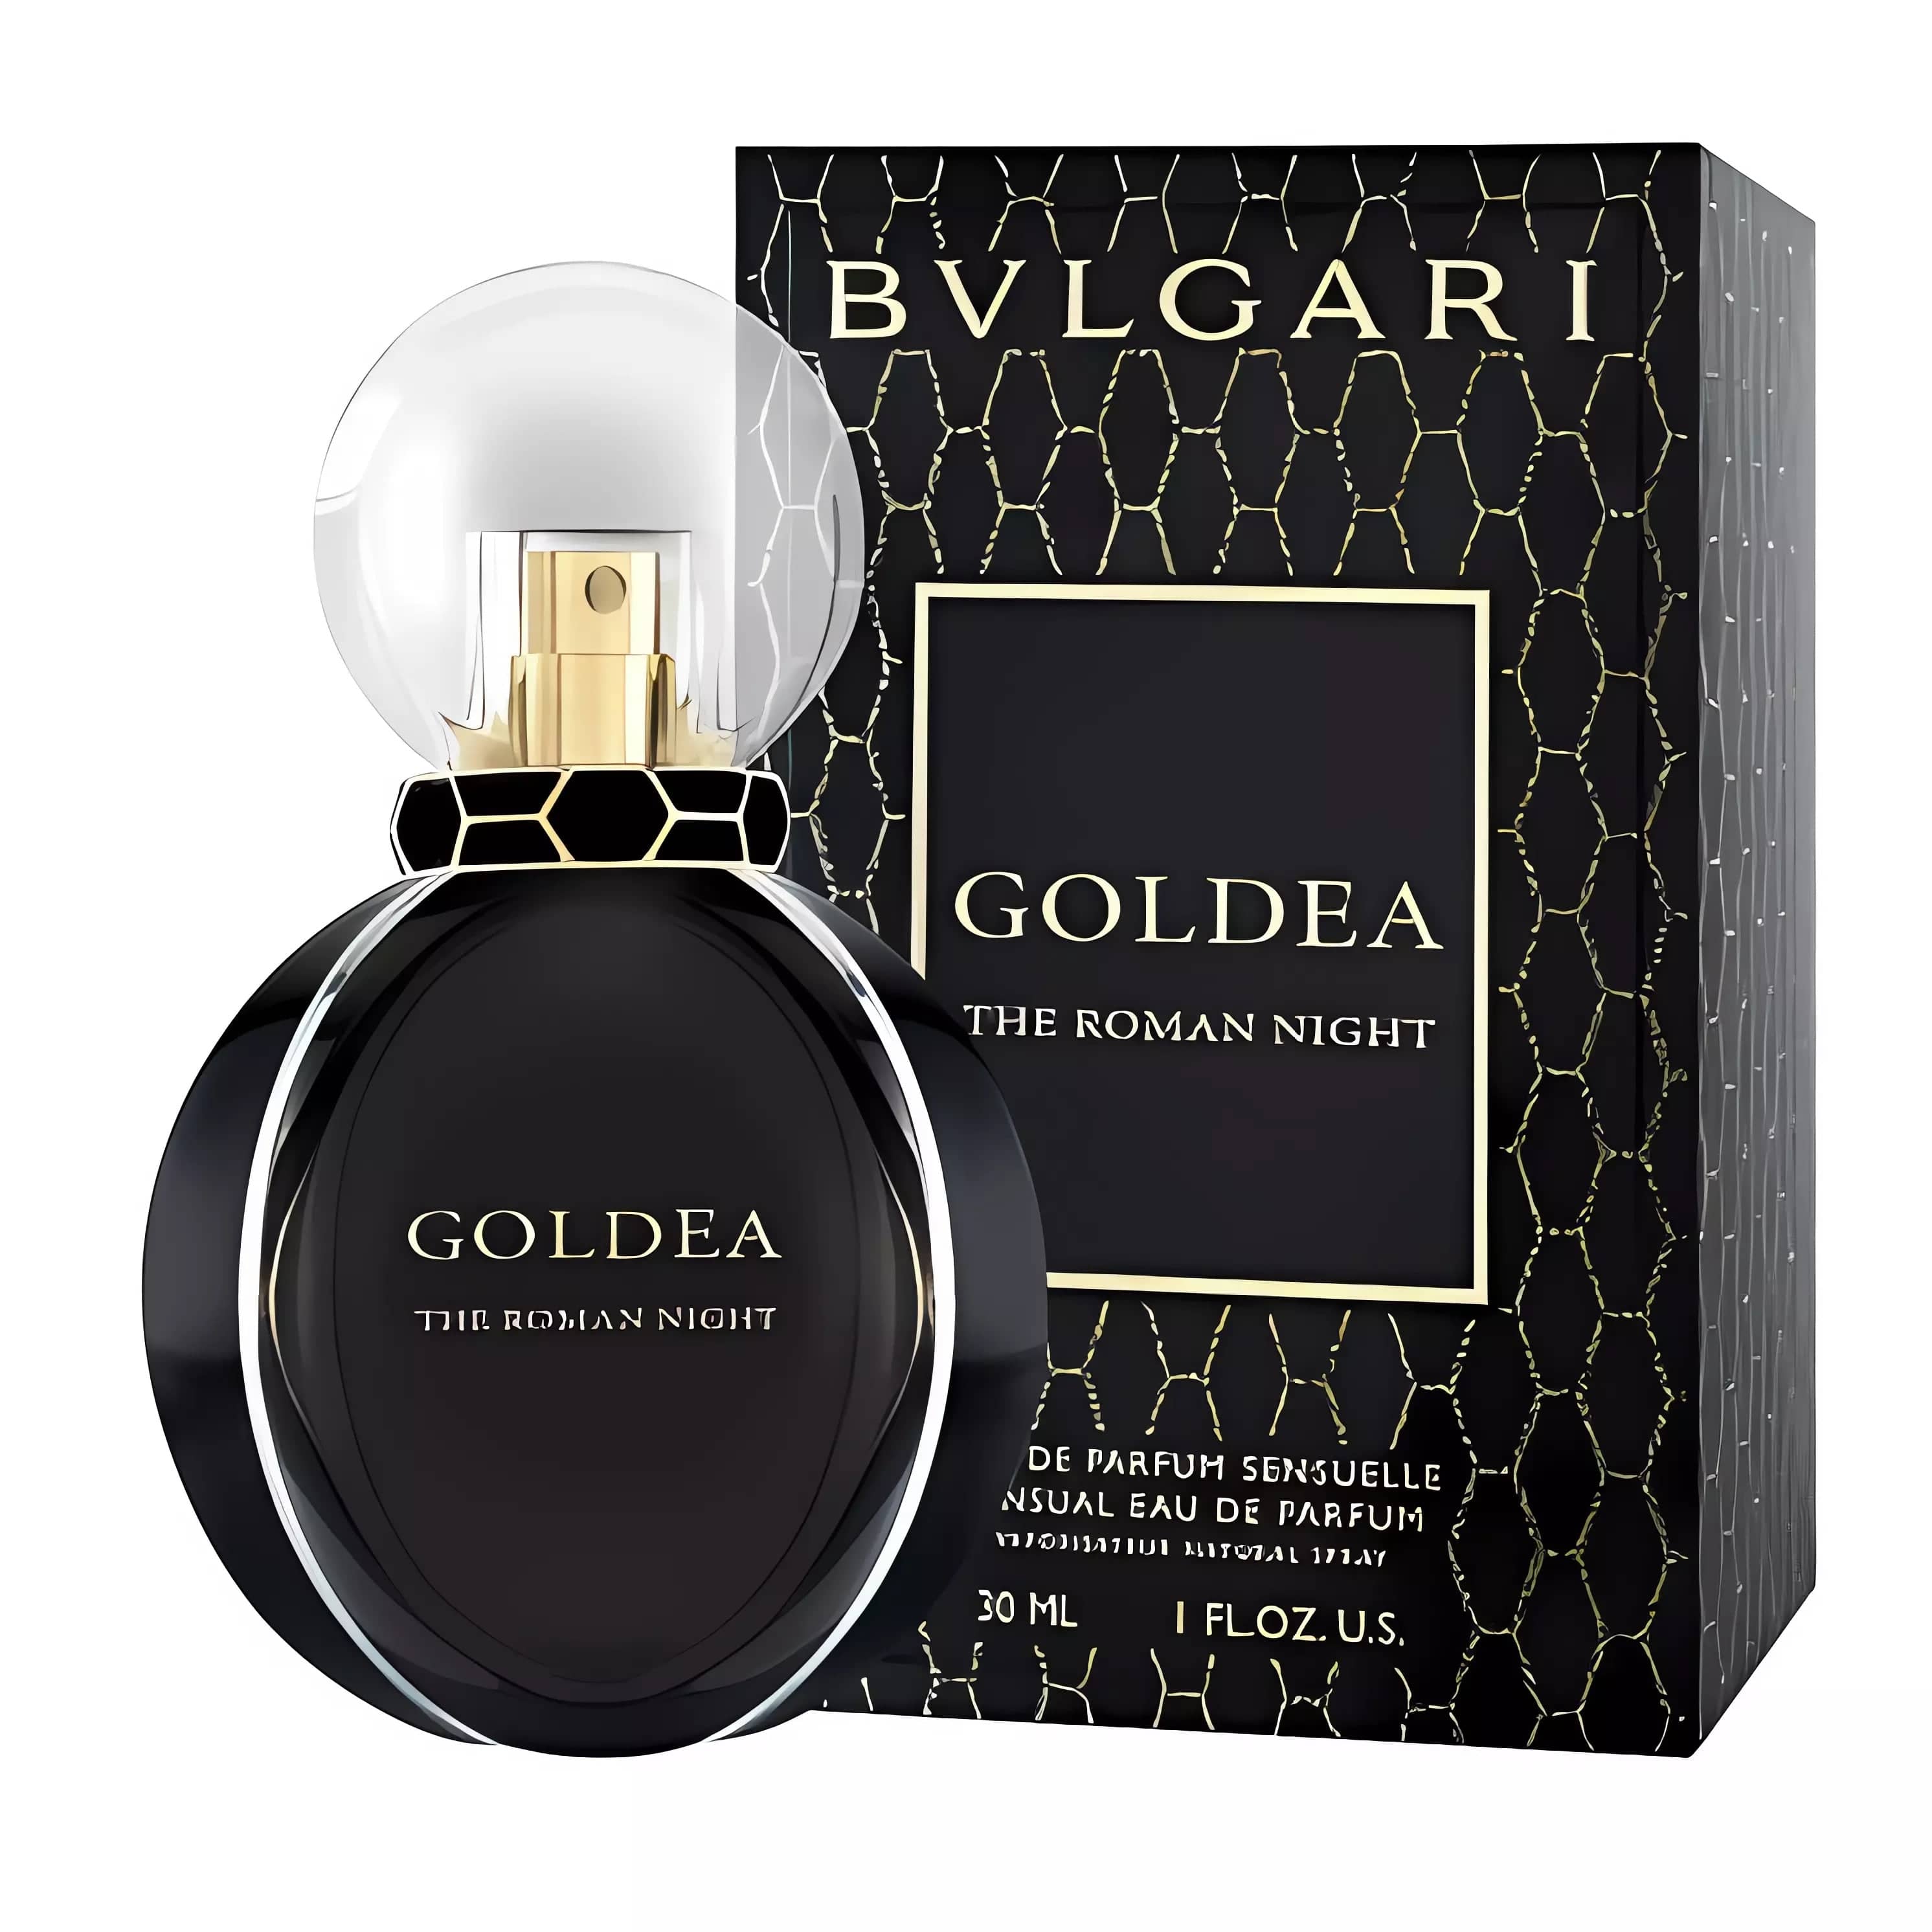 Goldea The Roman Night Eau de Parfum Eau de Parfum BVLGARI 30 ml  